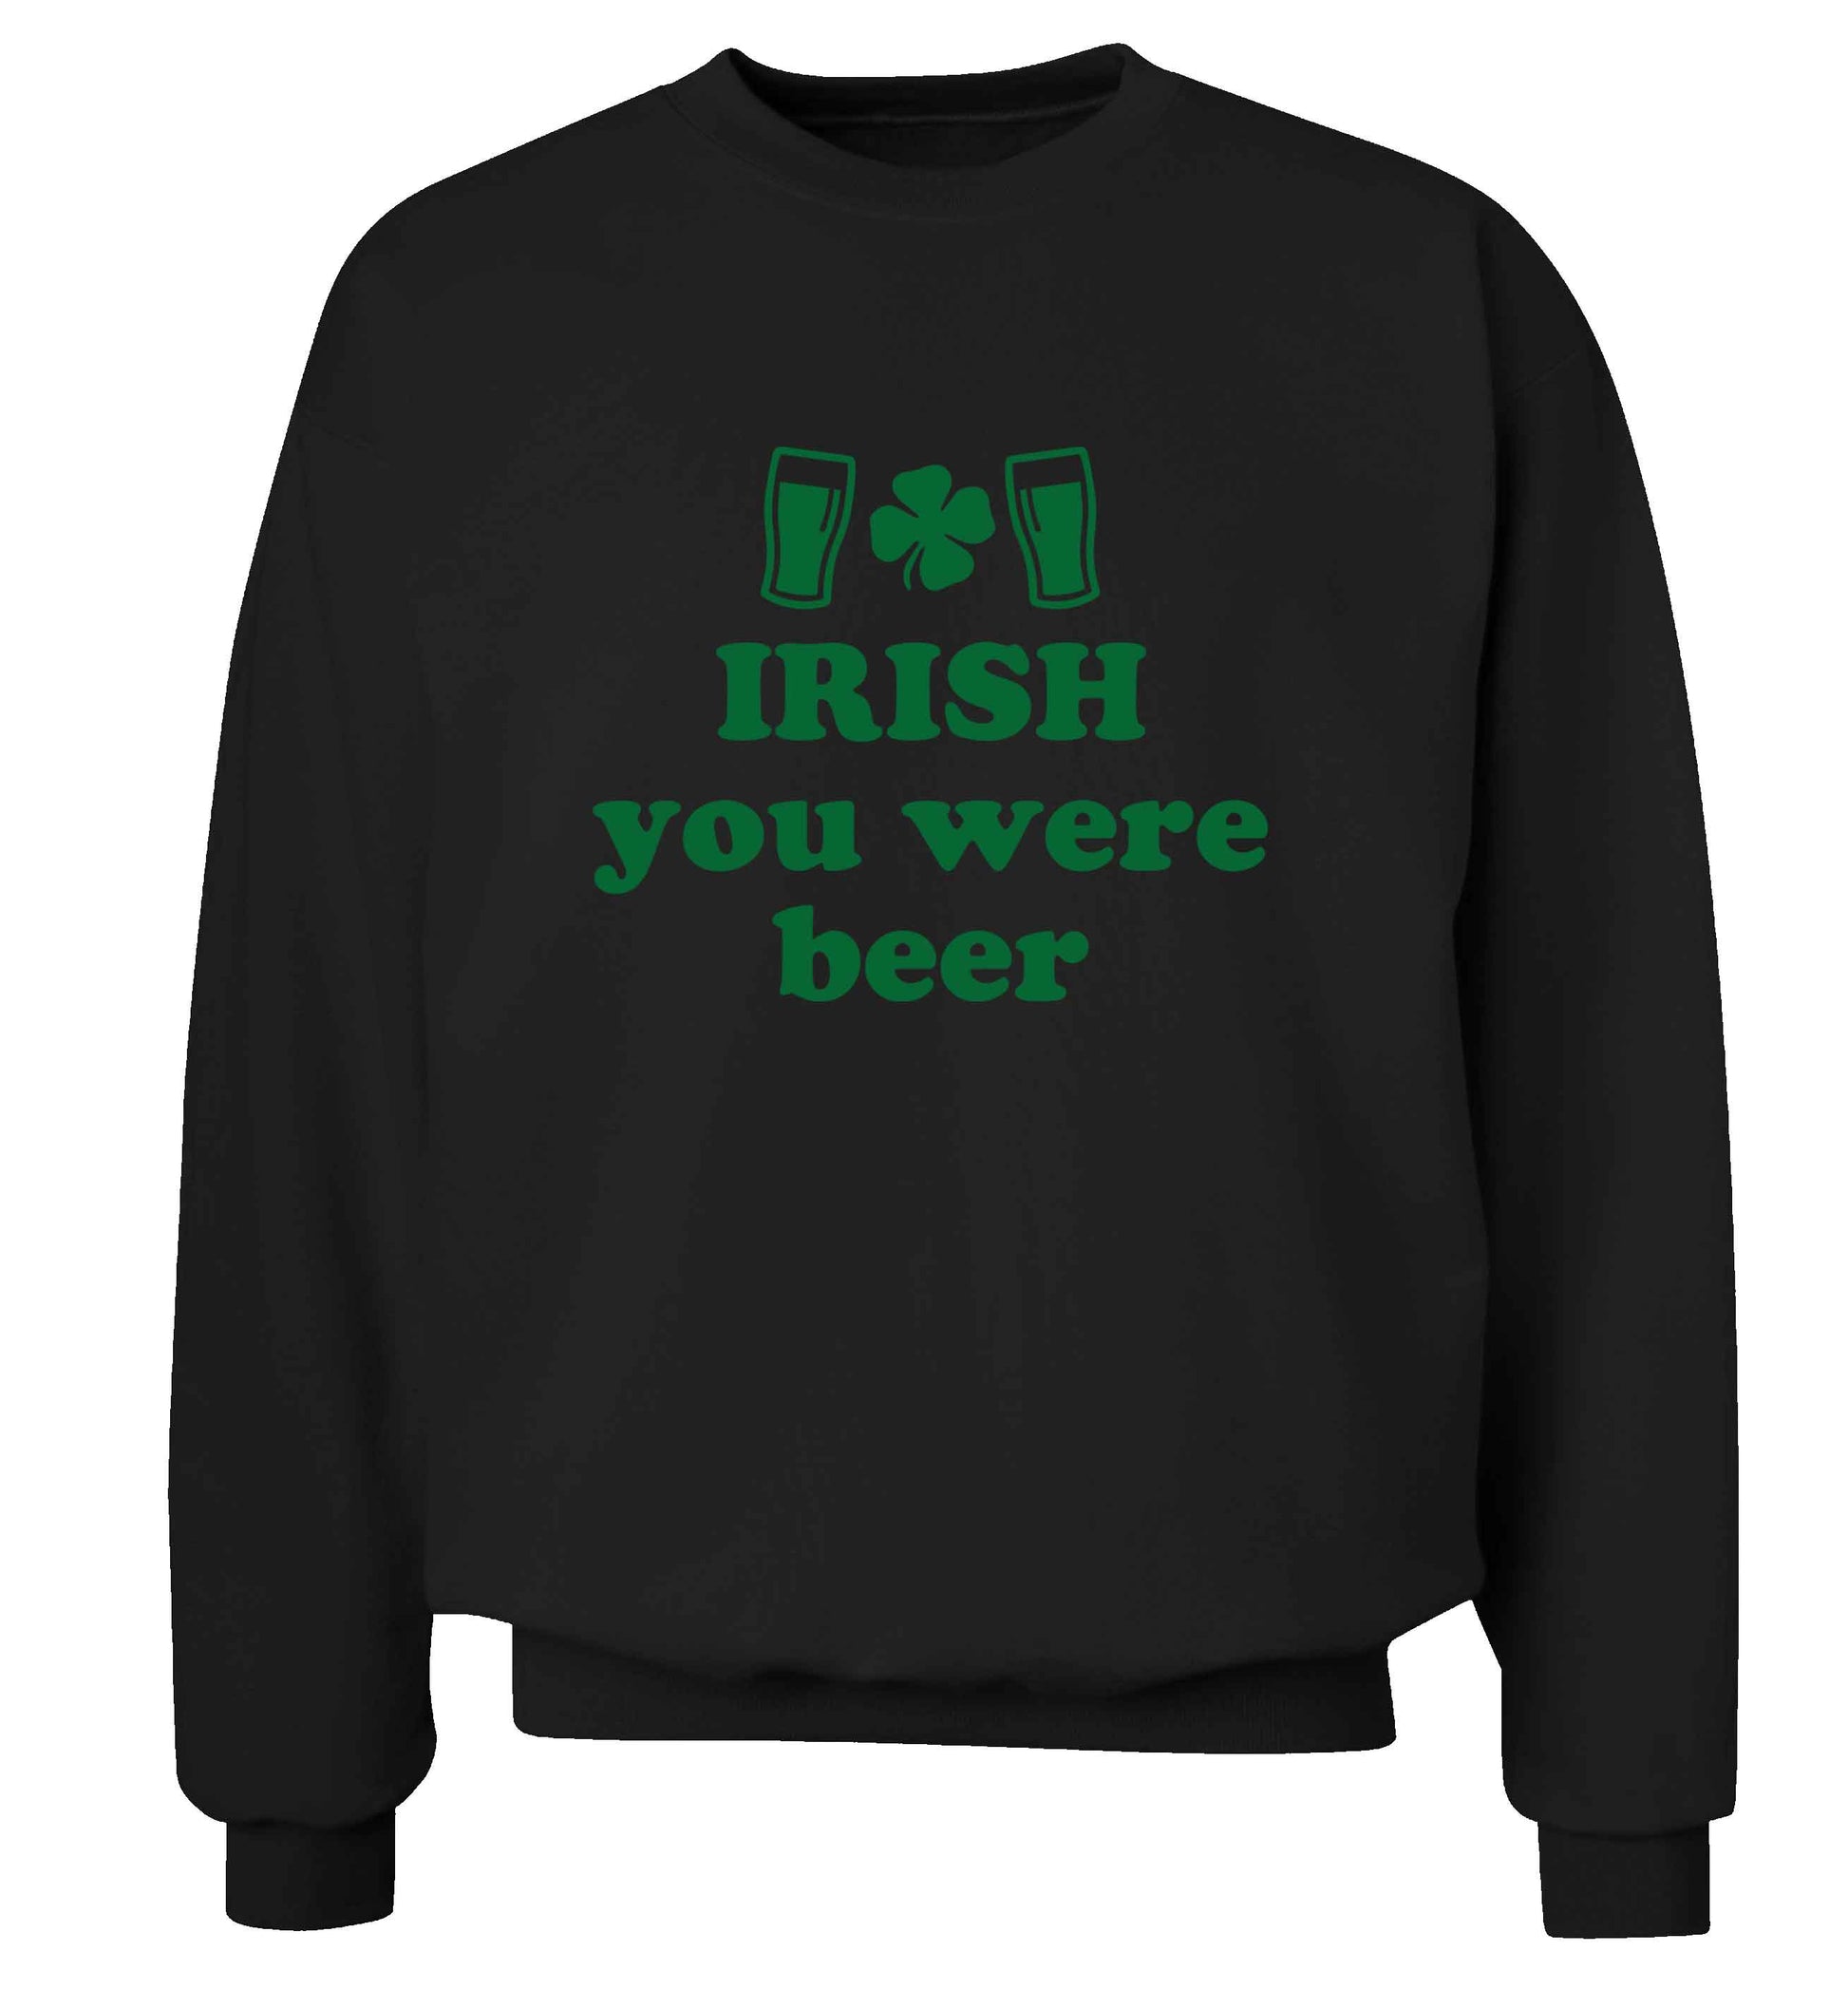 Irish you were beer adult's unisex black sweater 2XL